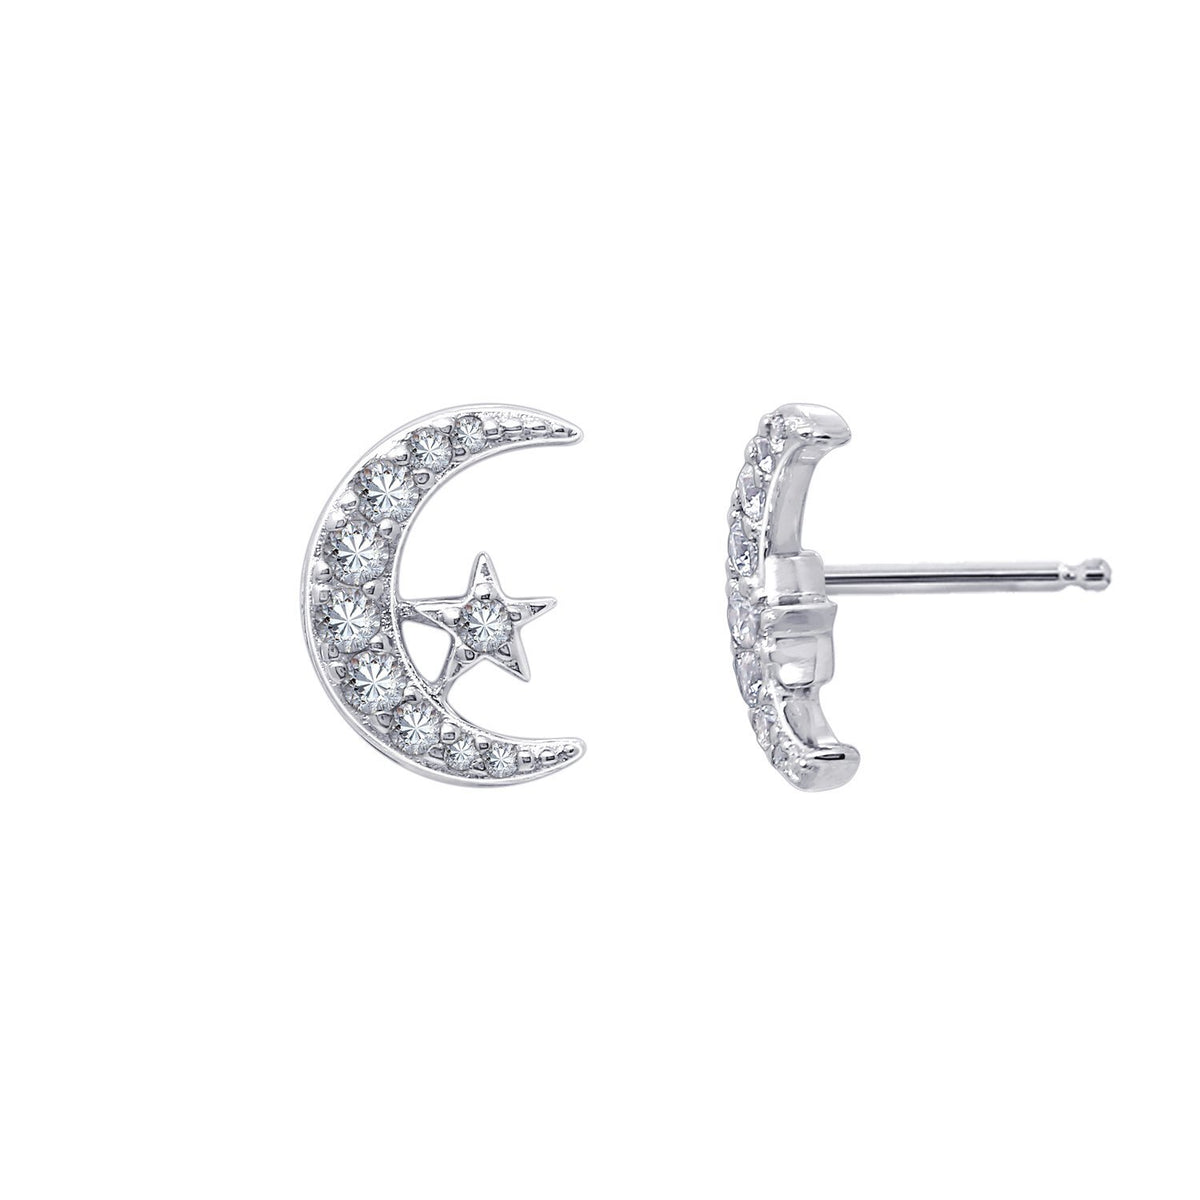 GEMOUR Cubic Zirconia Moon And Star Stud Earrings - GEMOUR